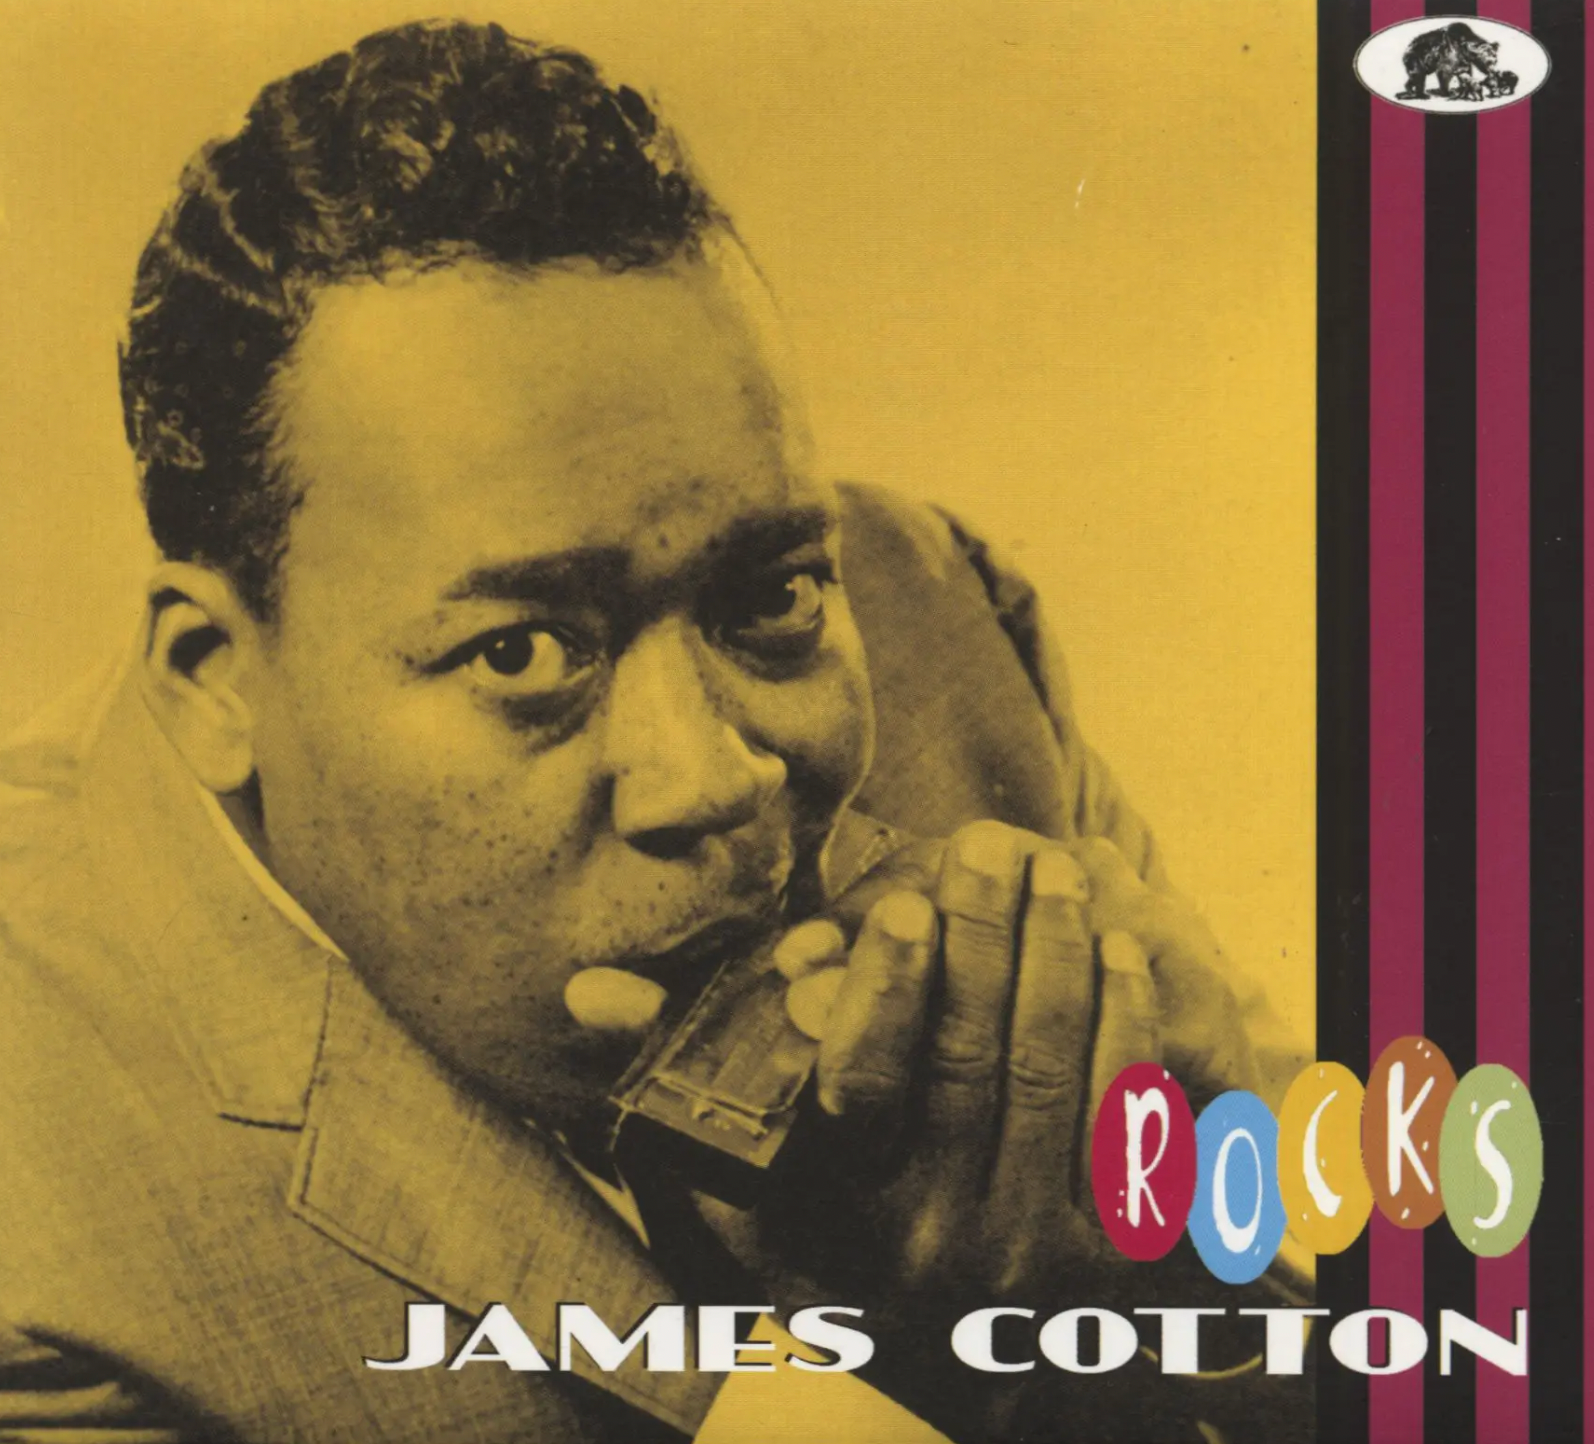 James Cotton Rocks album